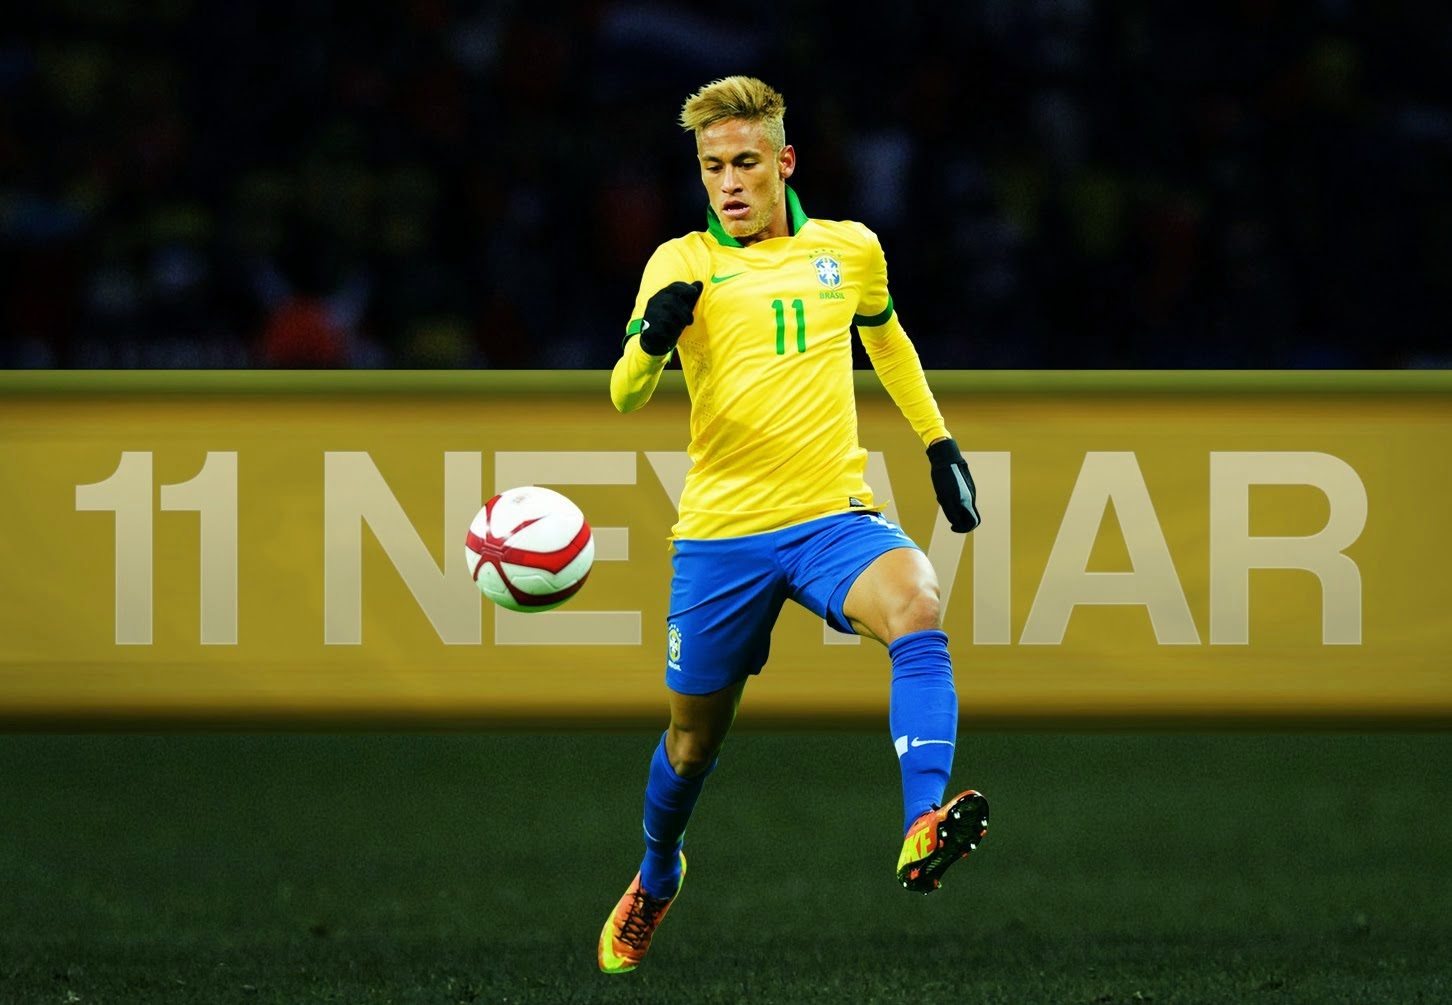 Neymar Football Soccer Player Hd Free Kick Ball To Goal Mobile Desktop Bakground Download Photos